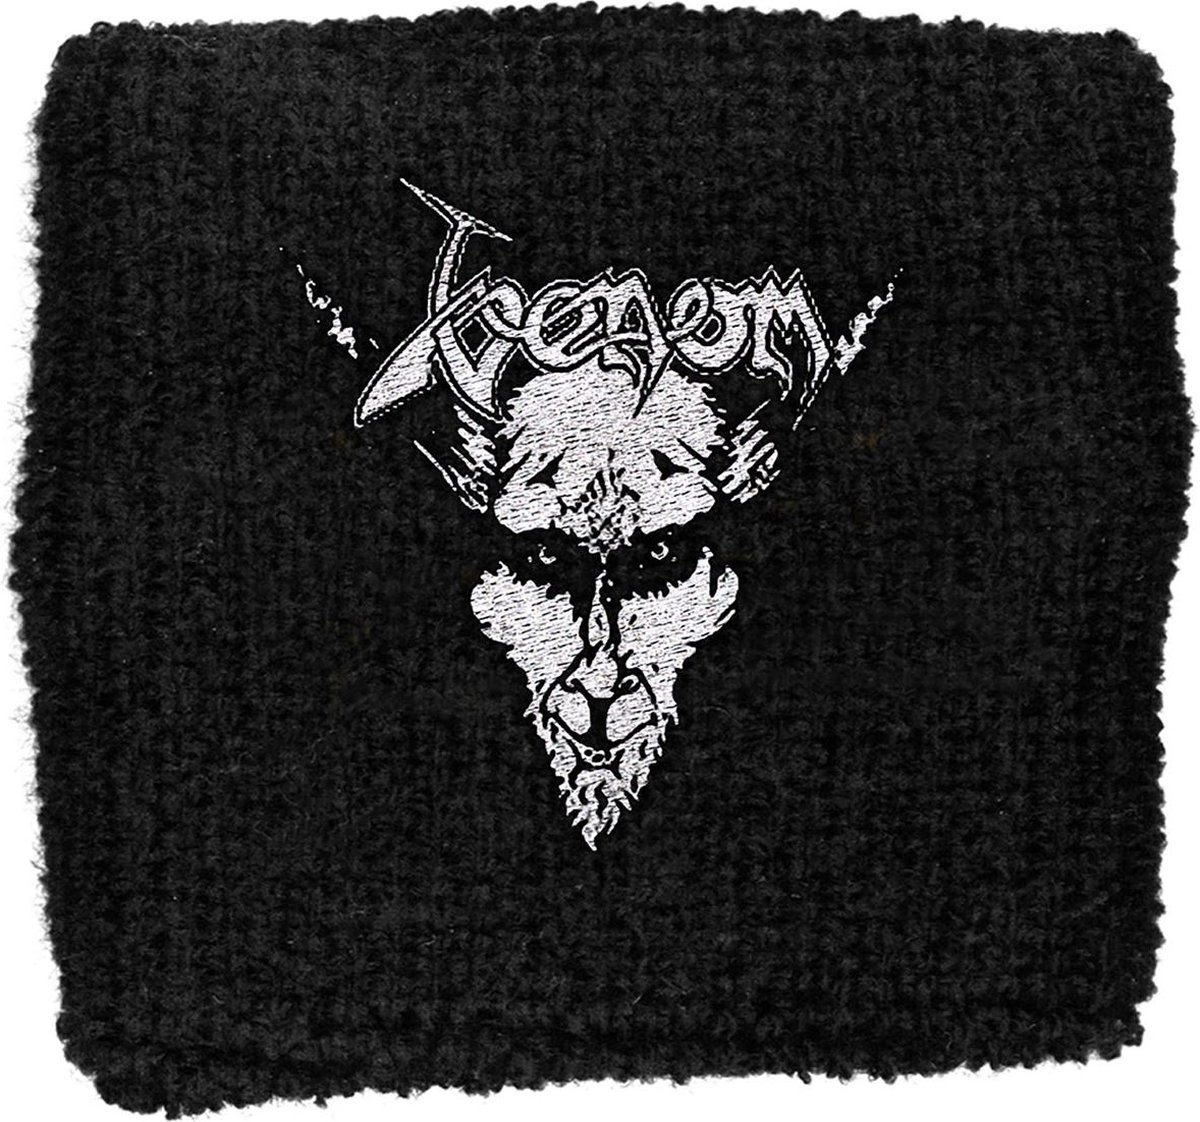 Venom - Black Metal - wristband zweetbandje